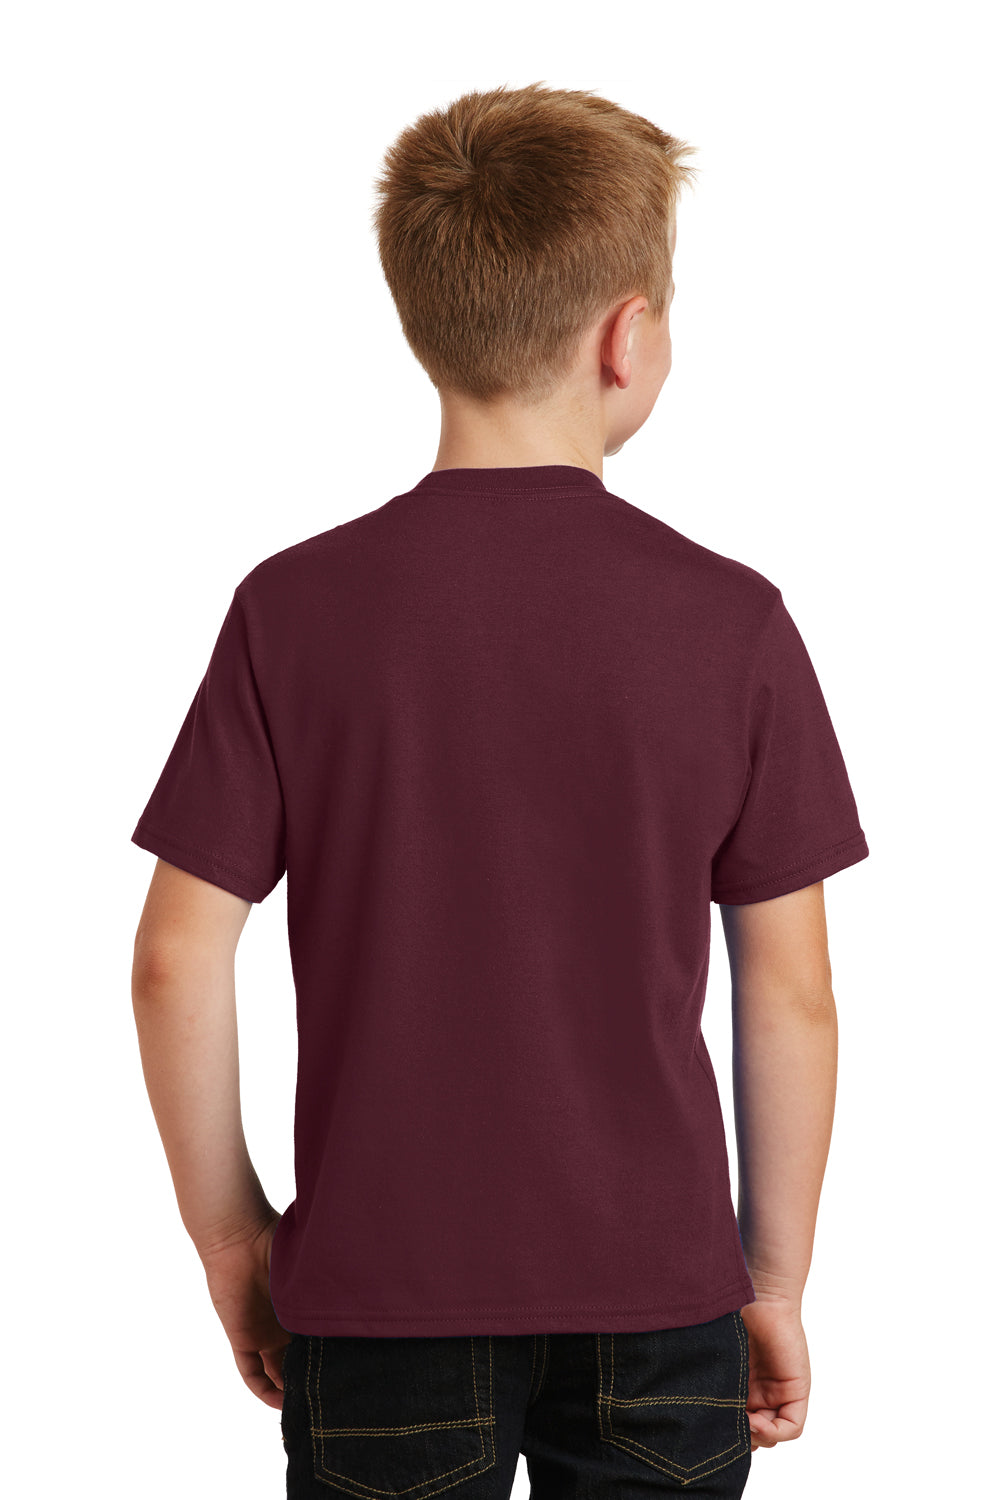 Port & Company PC450Y Youth Fan Favorite Short Sleeve Crewneck T-Shirt Maroon Back